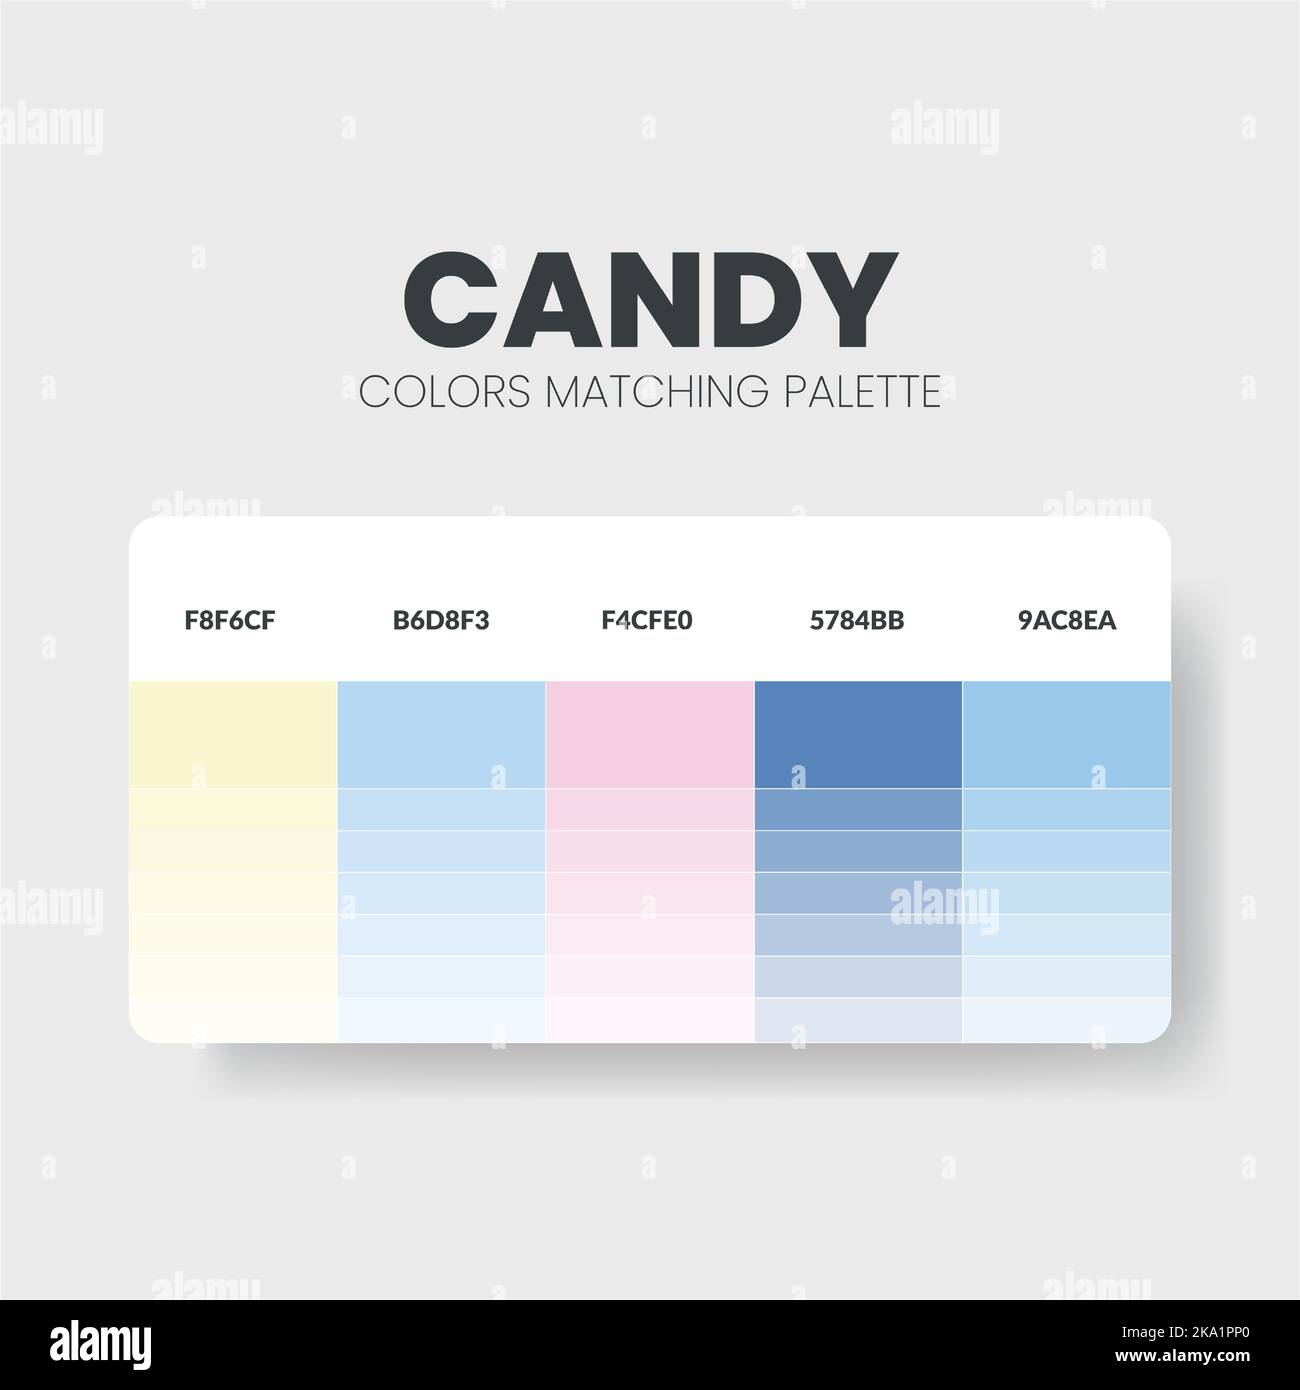 Color Chart Print Test Stock Illustrations – 162 Color Chart Print